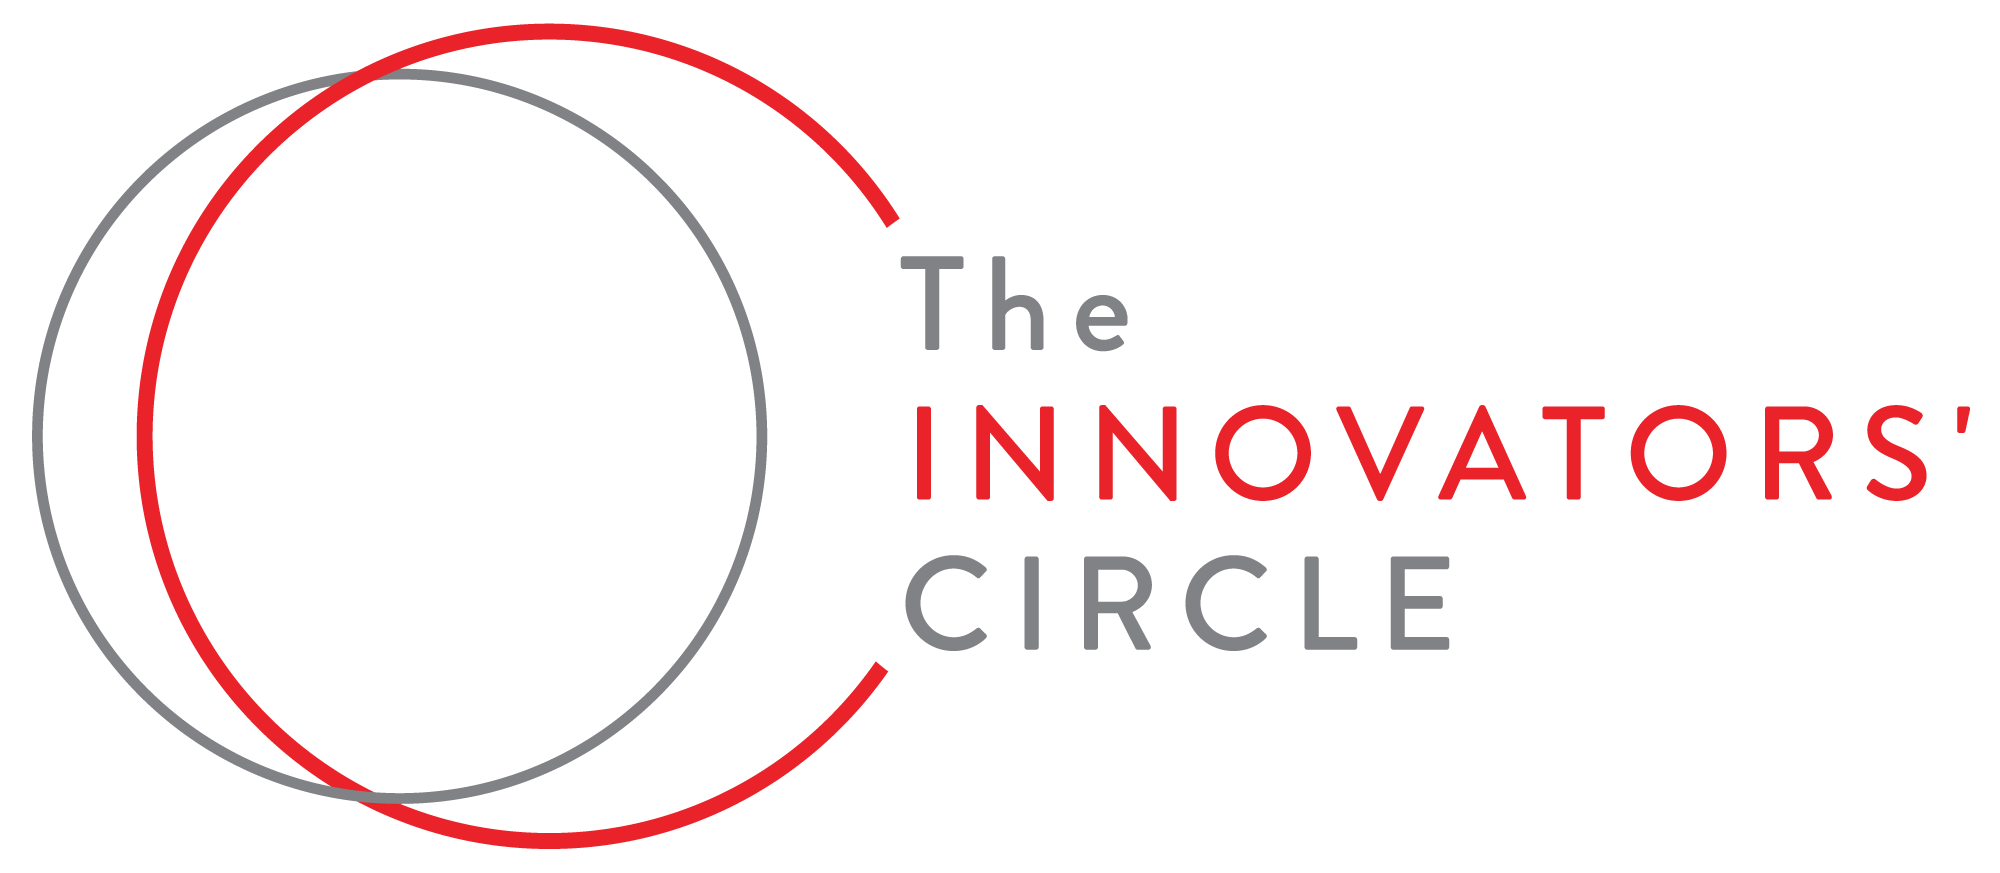 The Innovators' Circle